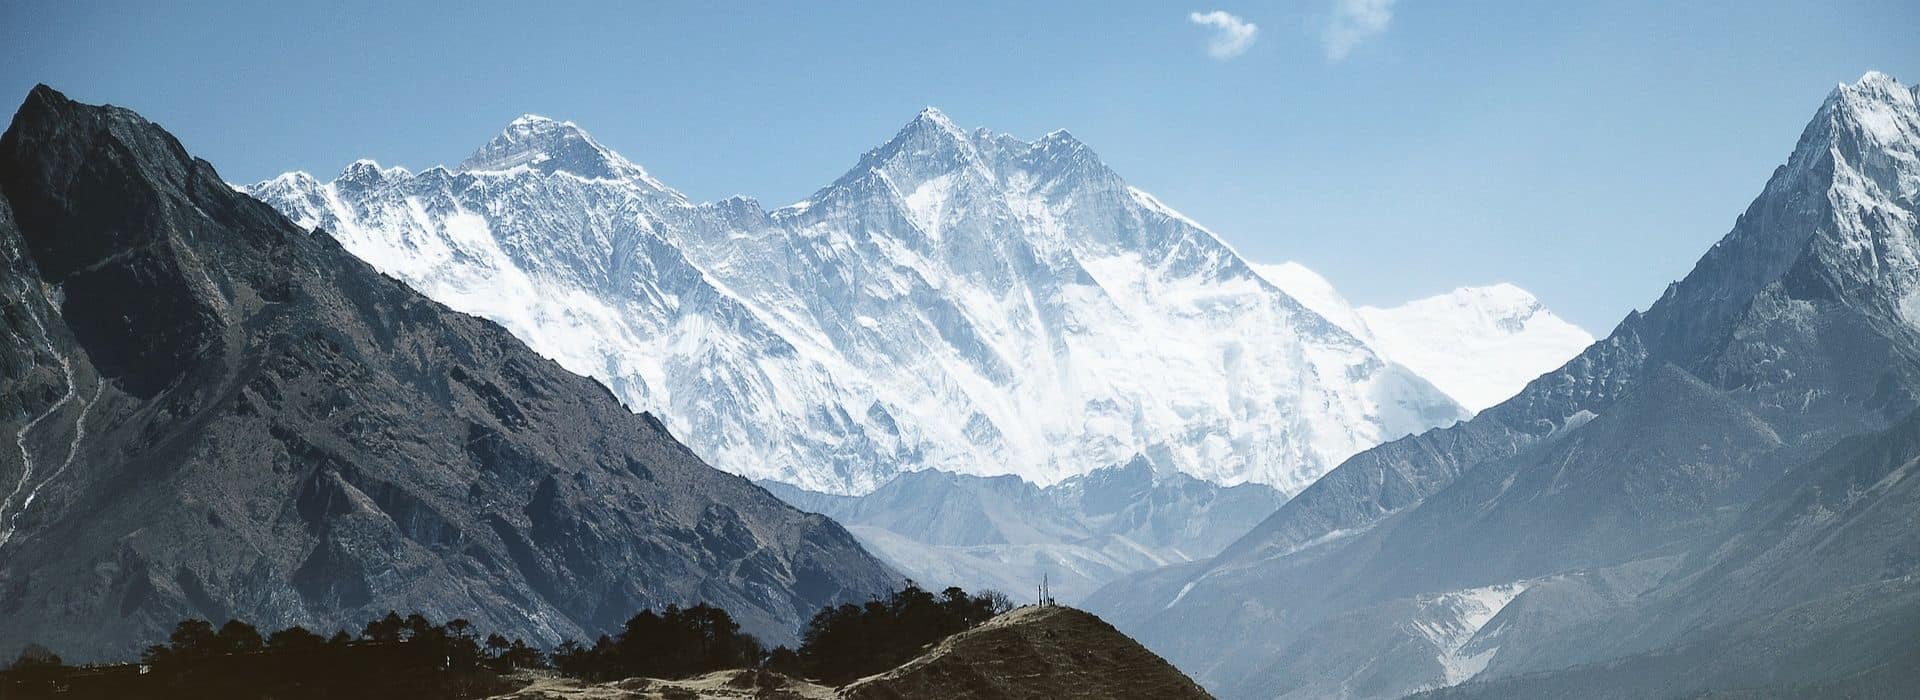 Everest Base Camp trek in August